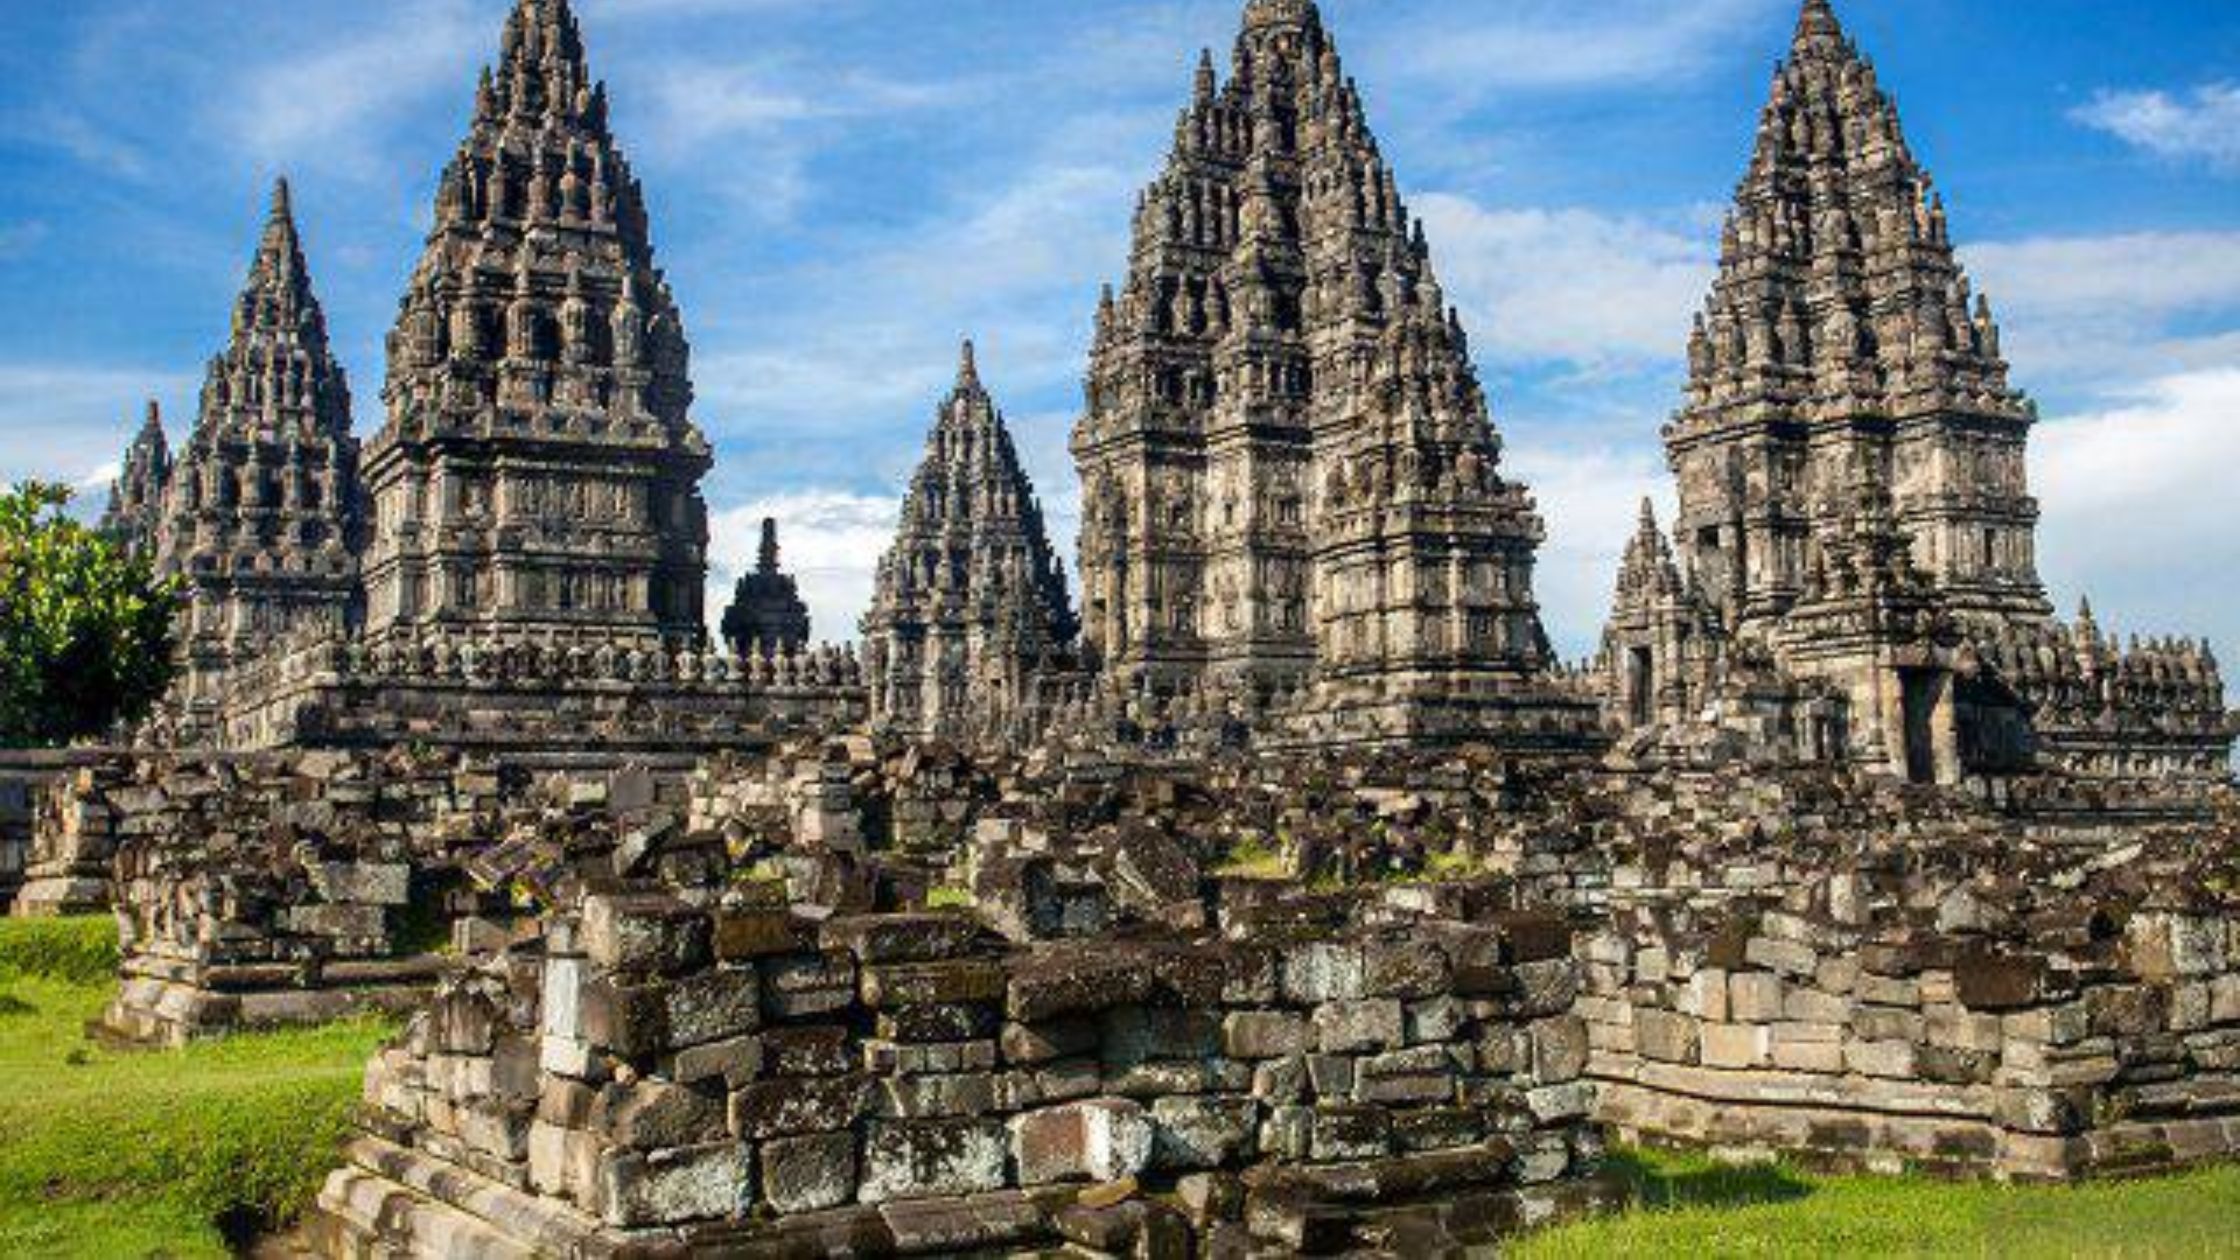 Prambanan temple replica will be seen in Bihar